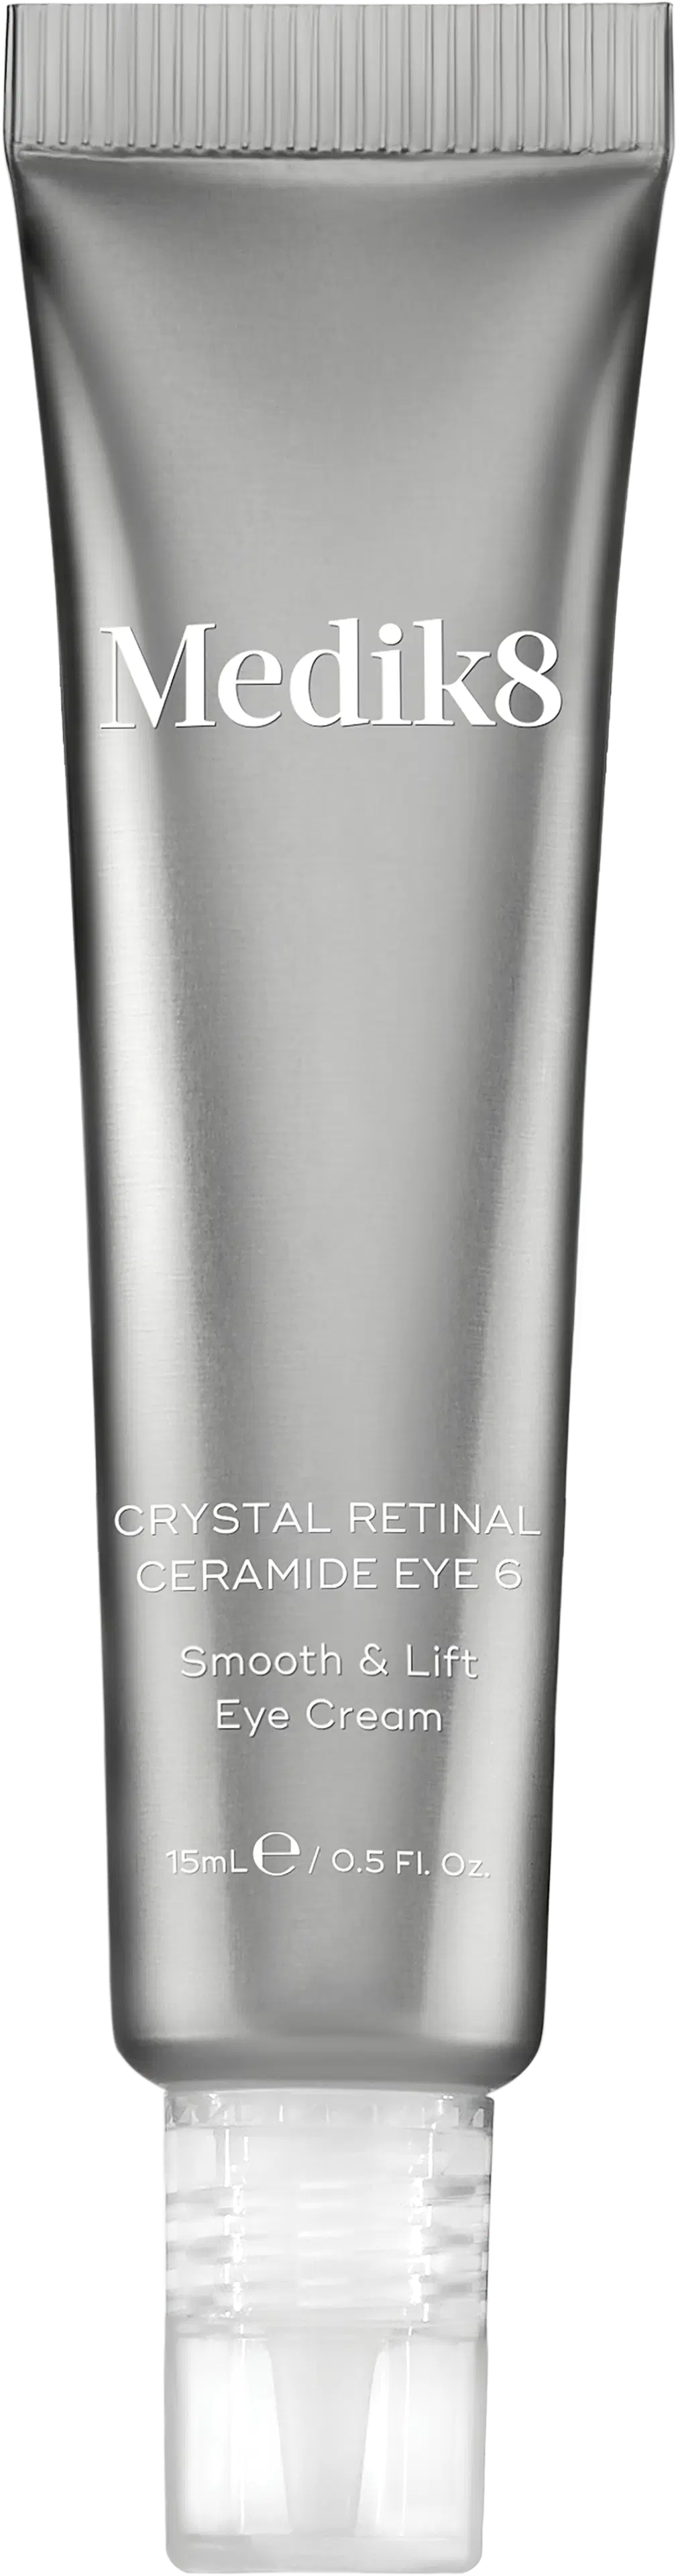 Medik8 Crystal Retinal Ceramide Eye 6 silmänympärysvoide 15 ml